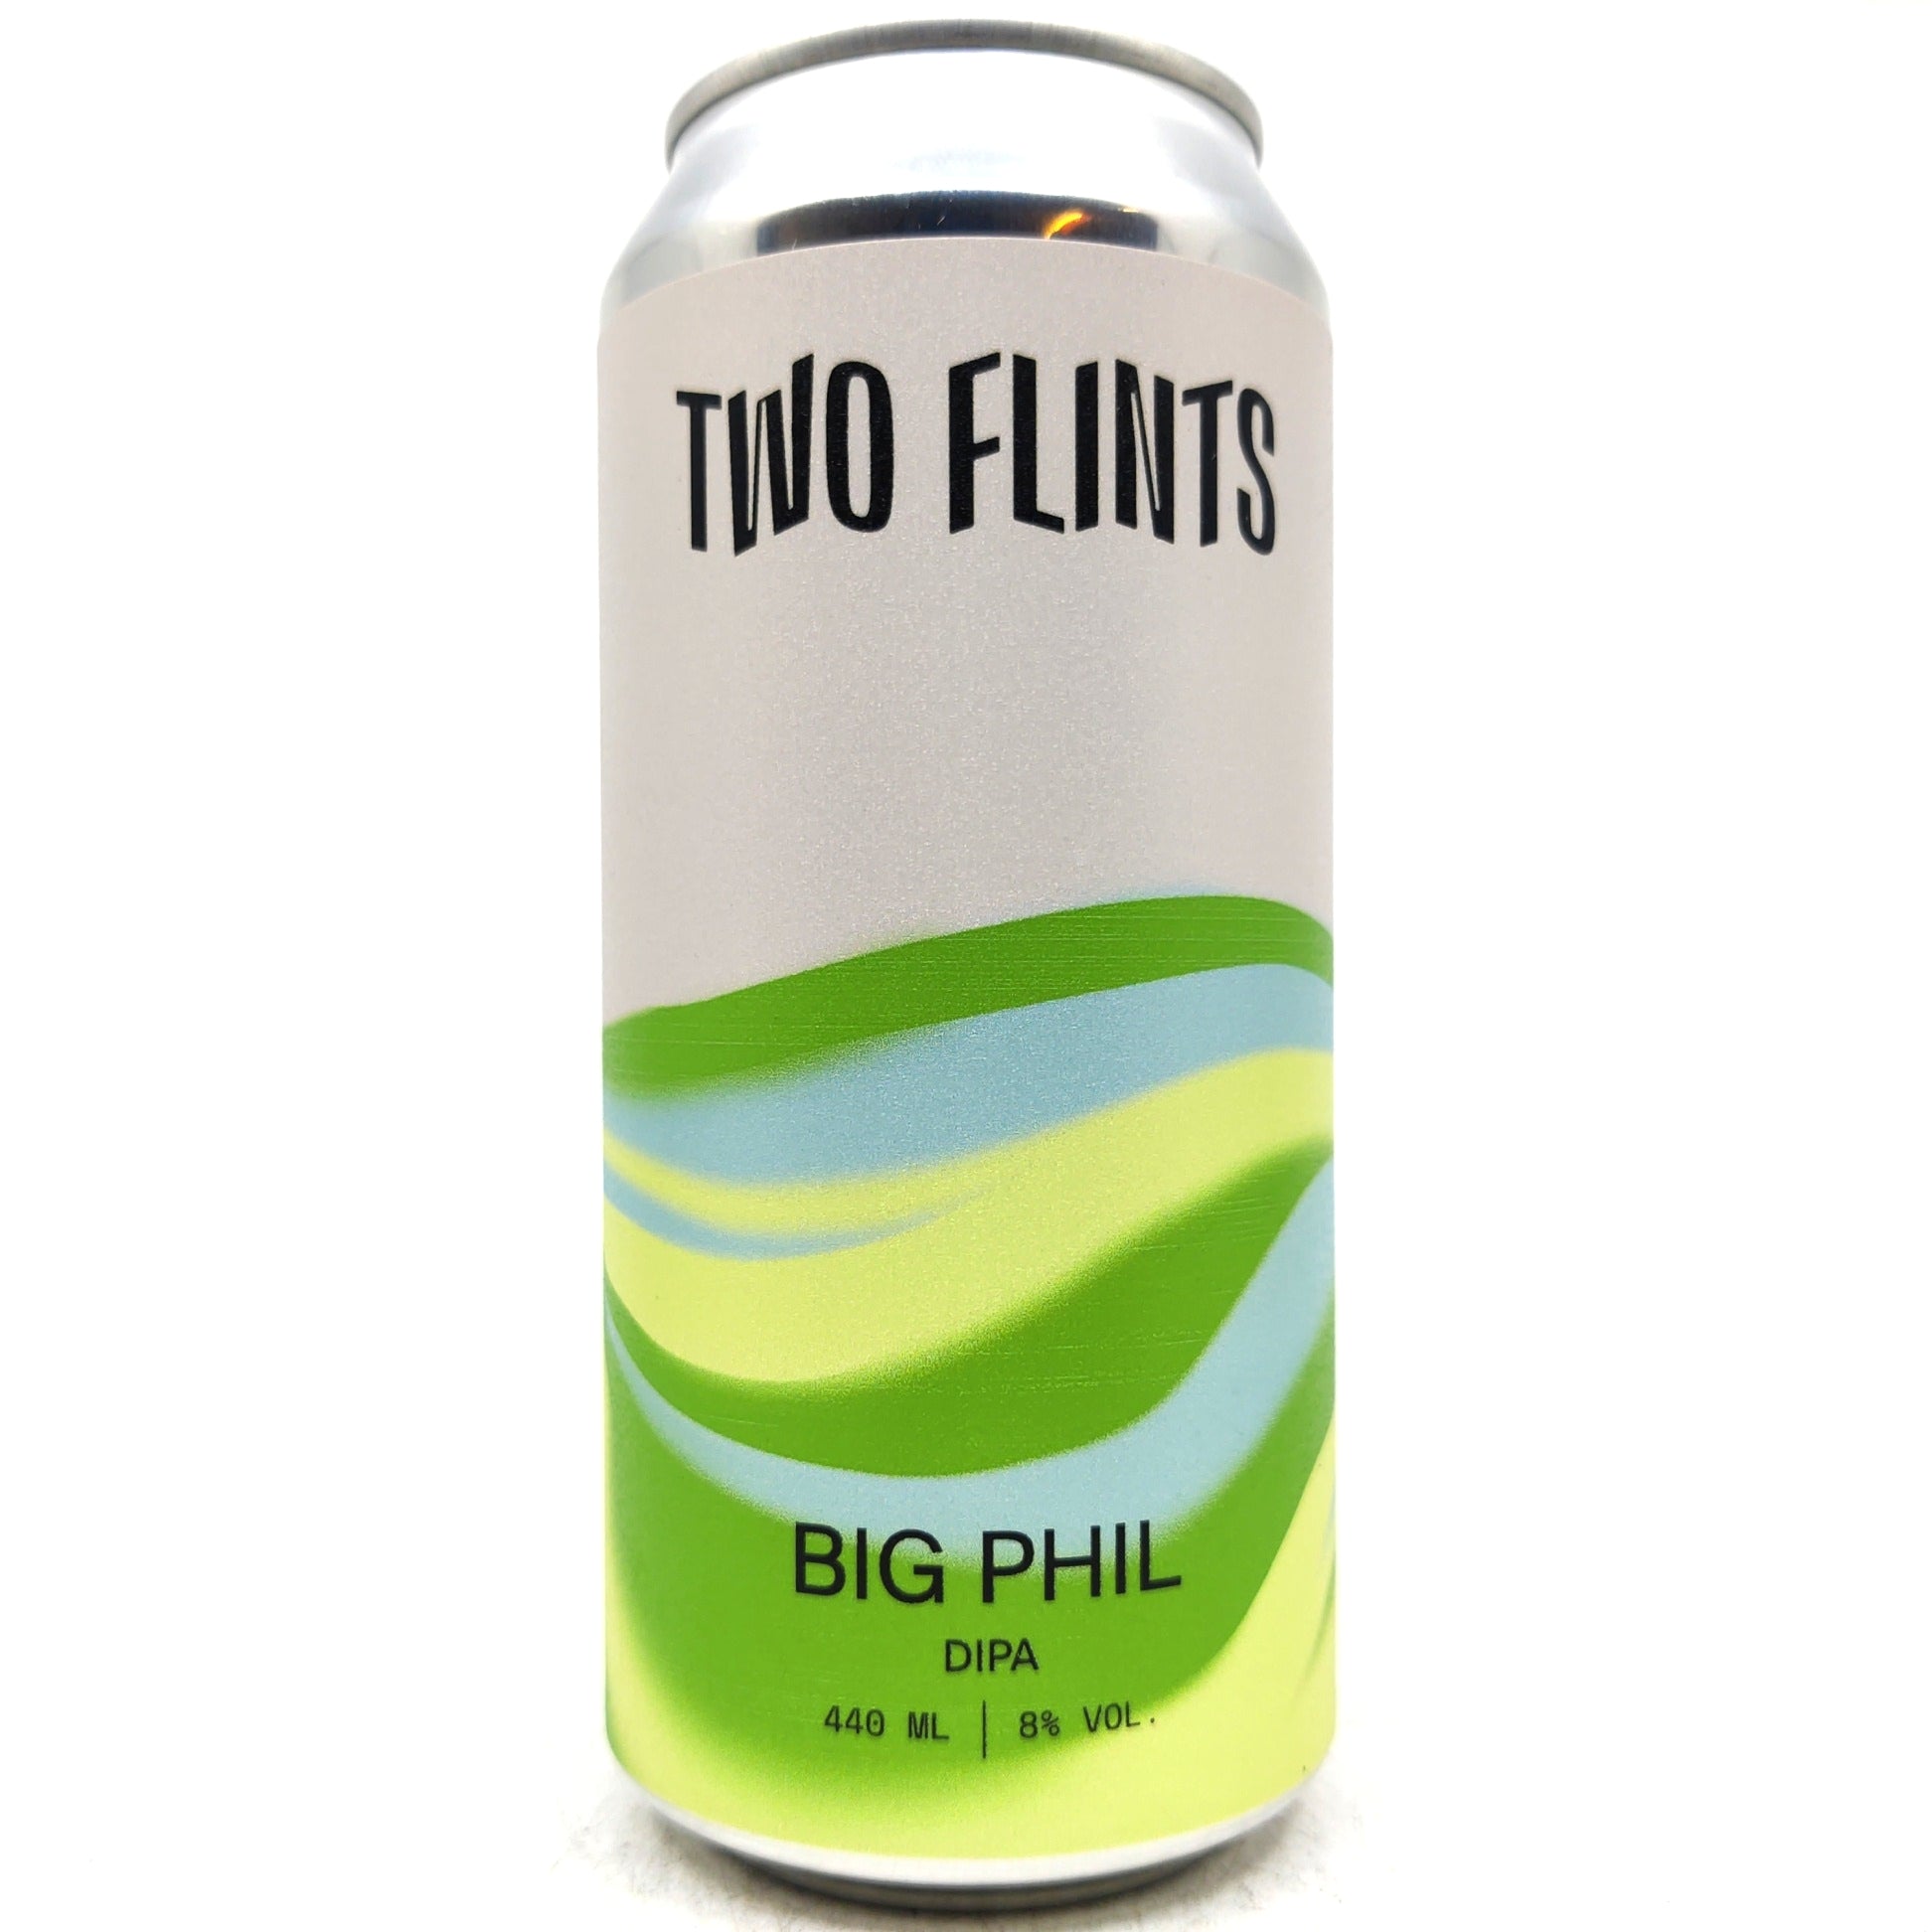 Two Flints Big Phil Double IPA 8% (440ml can)-Hop Burns & Black